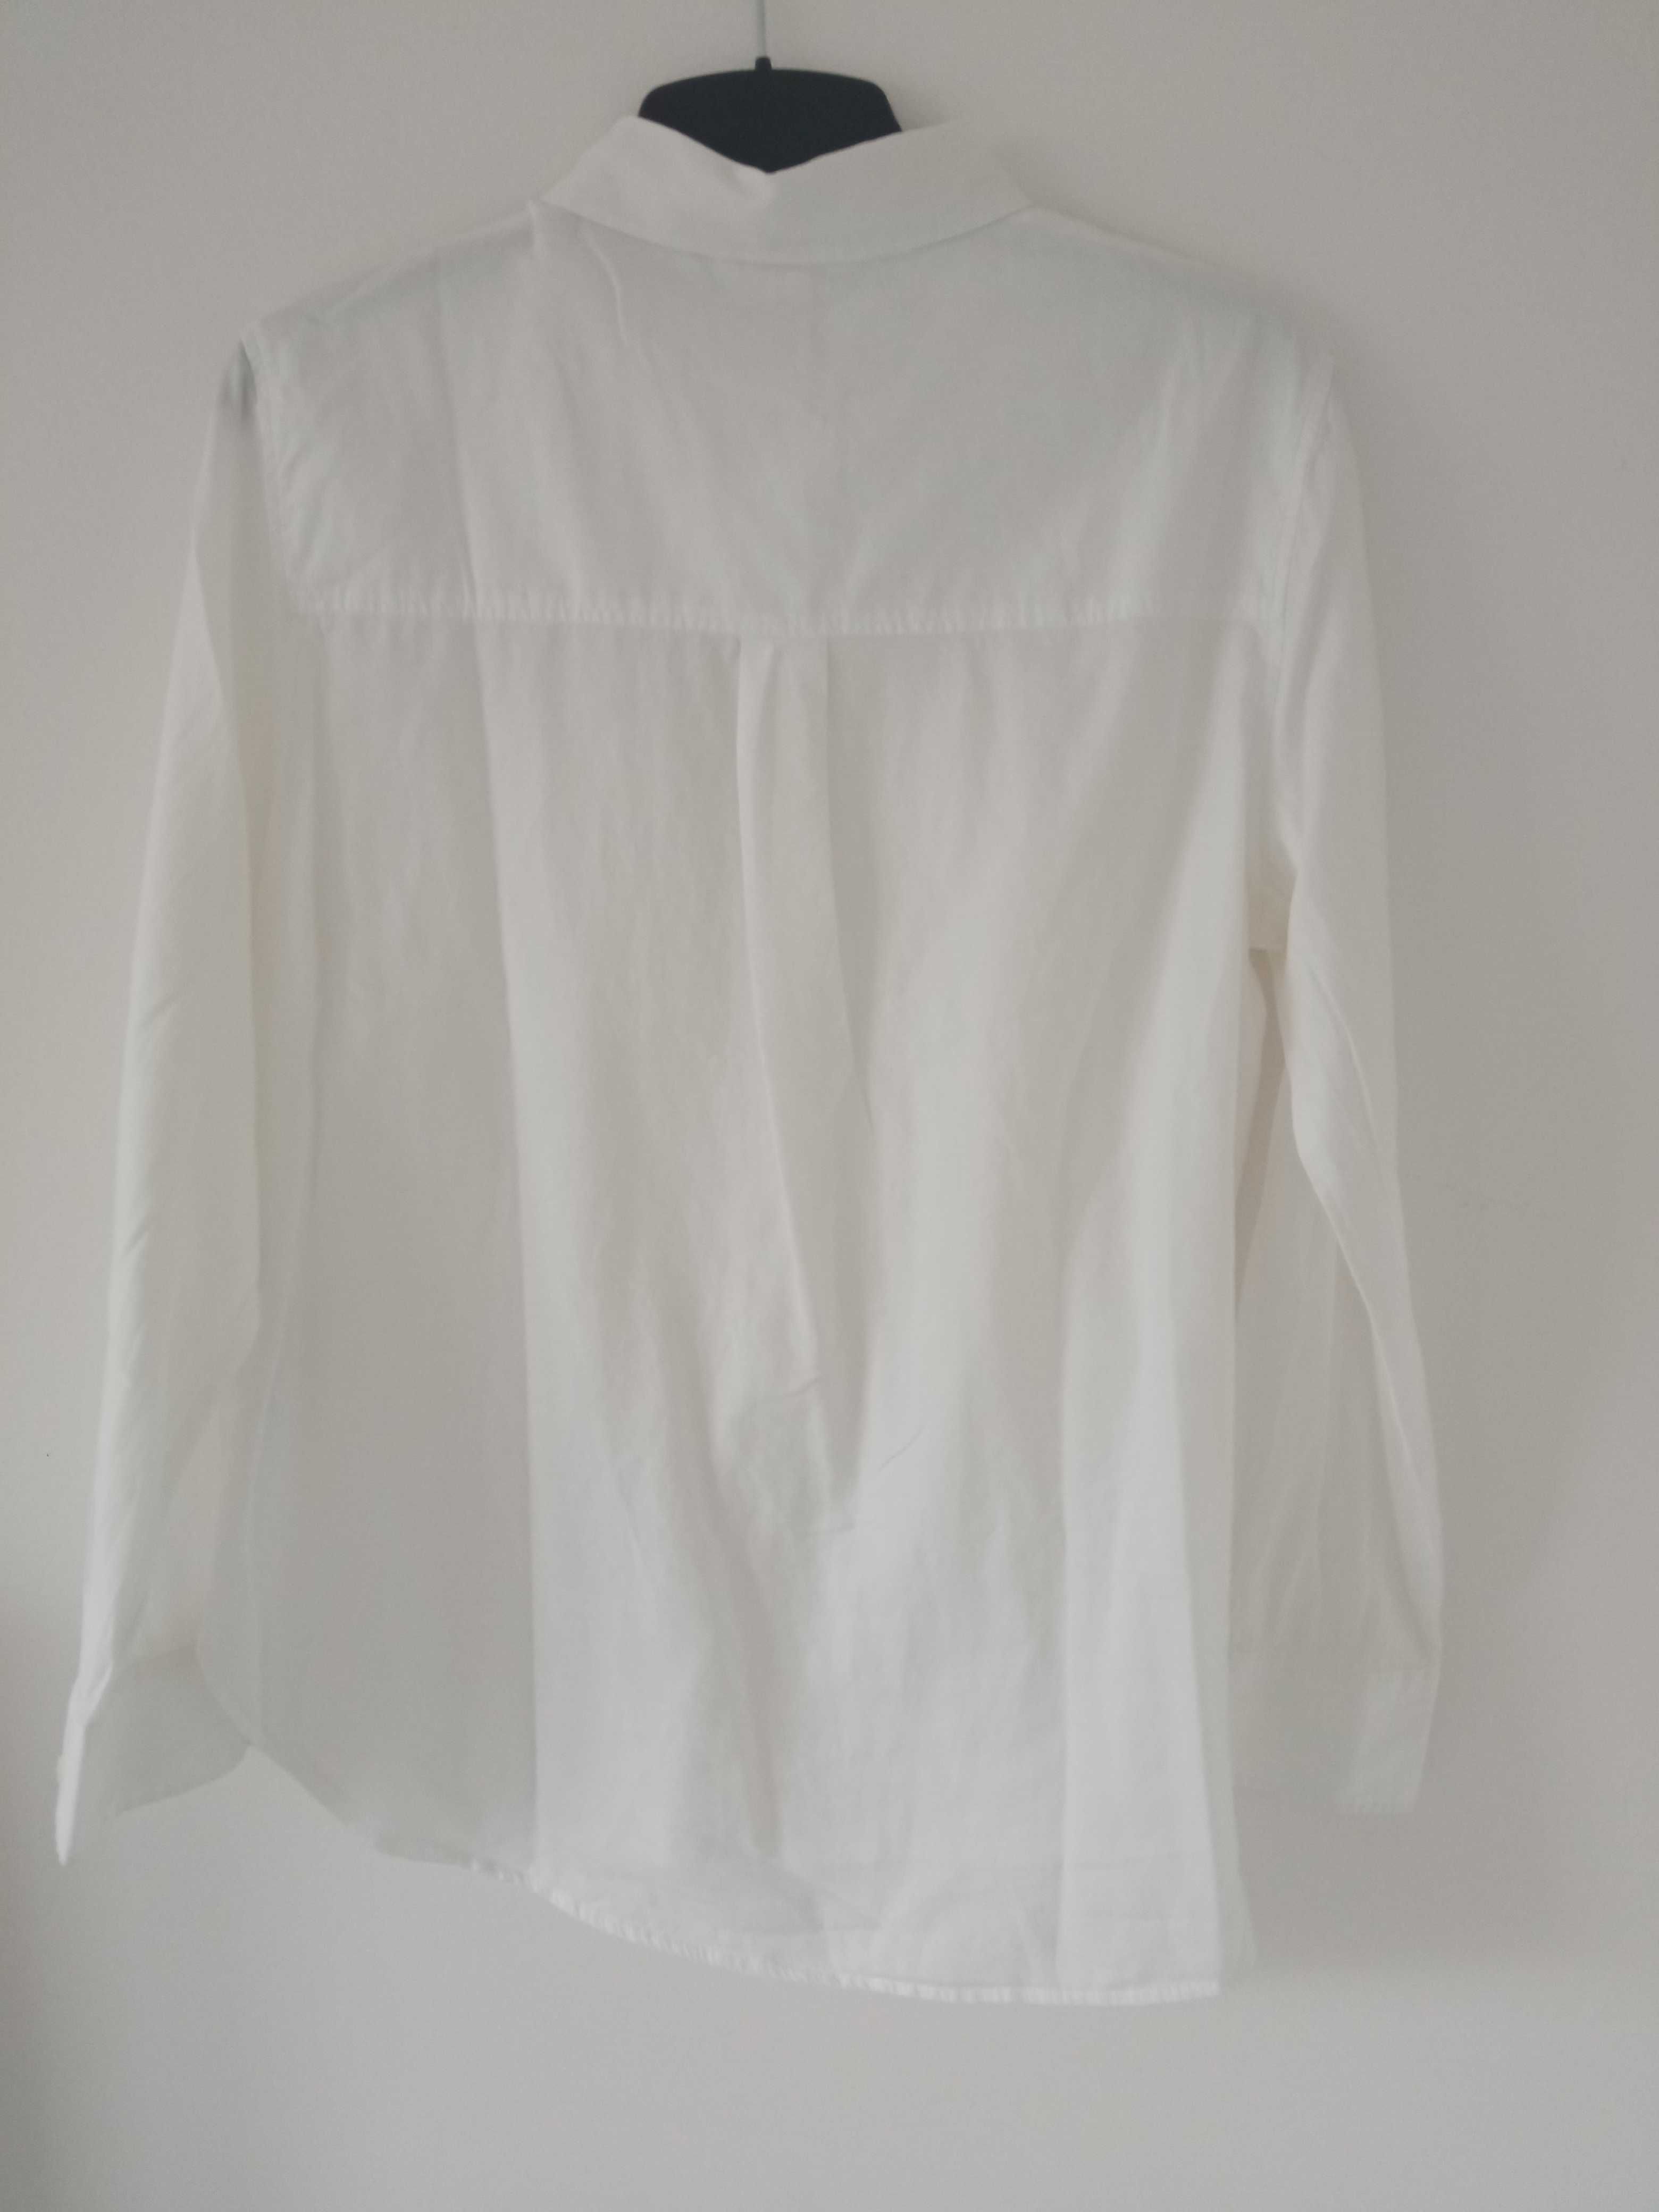 H&M damska biała koszula bluzka bawełna r  S